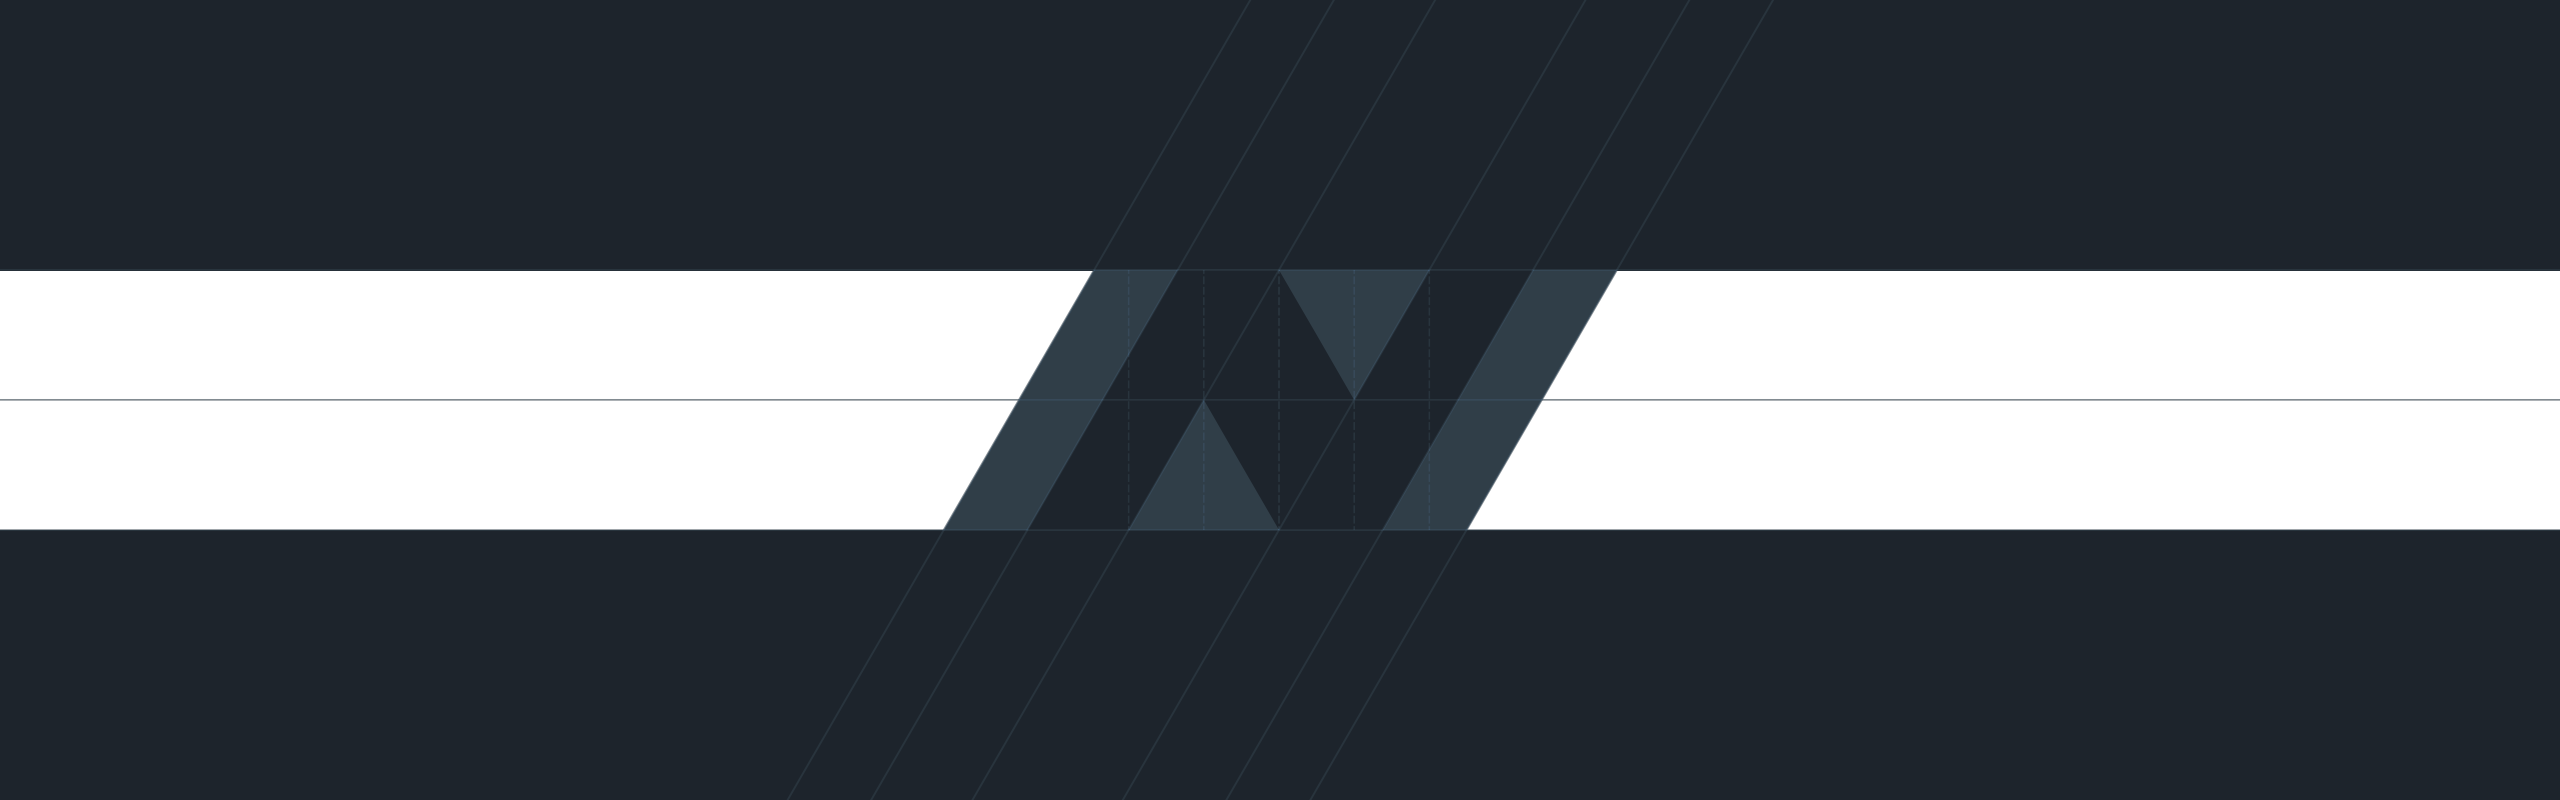 Создание логотипа NAS Broker